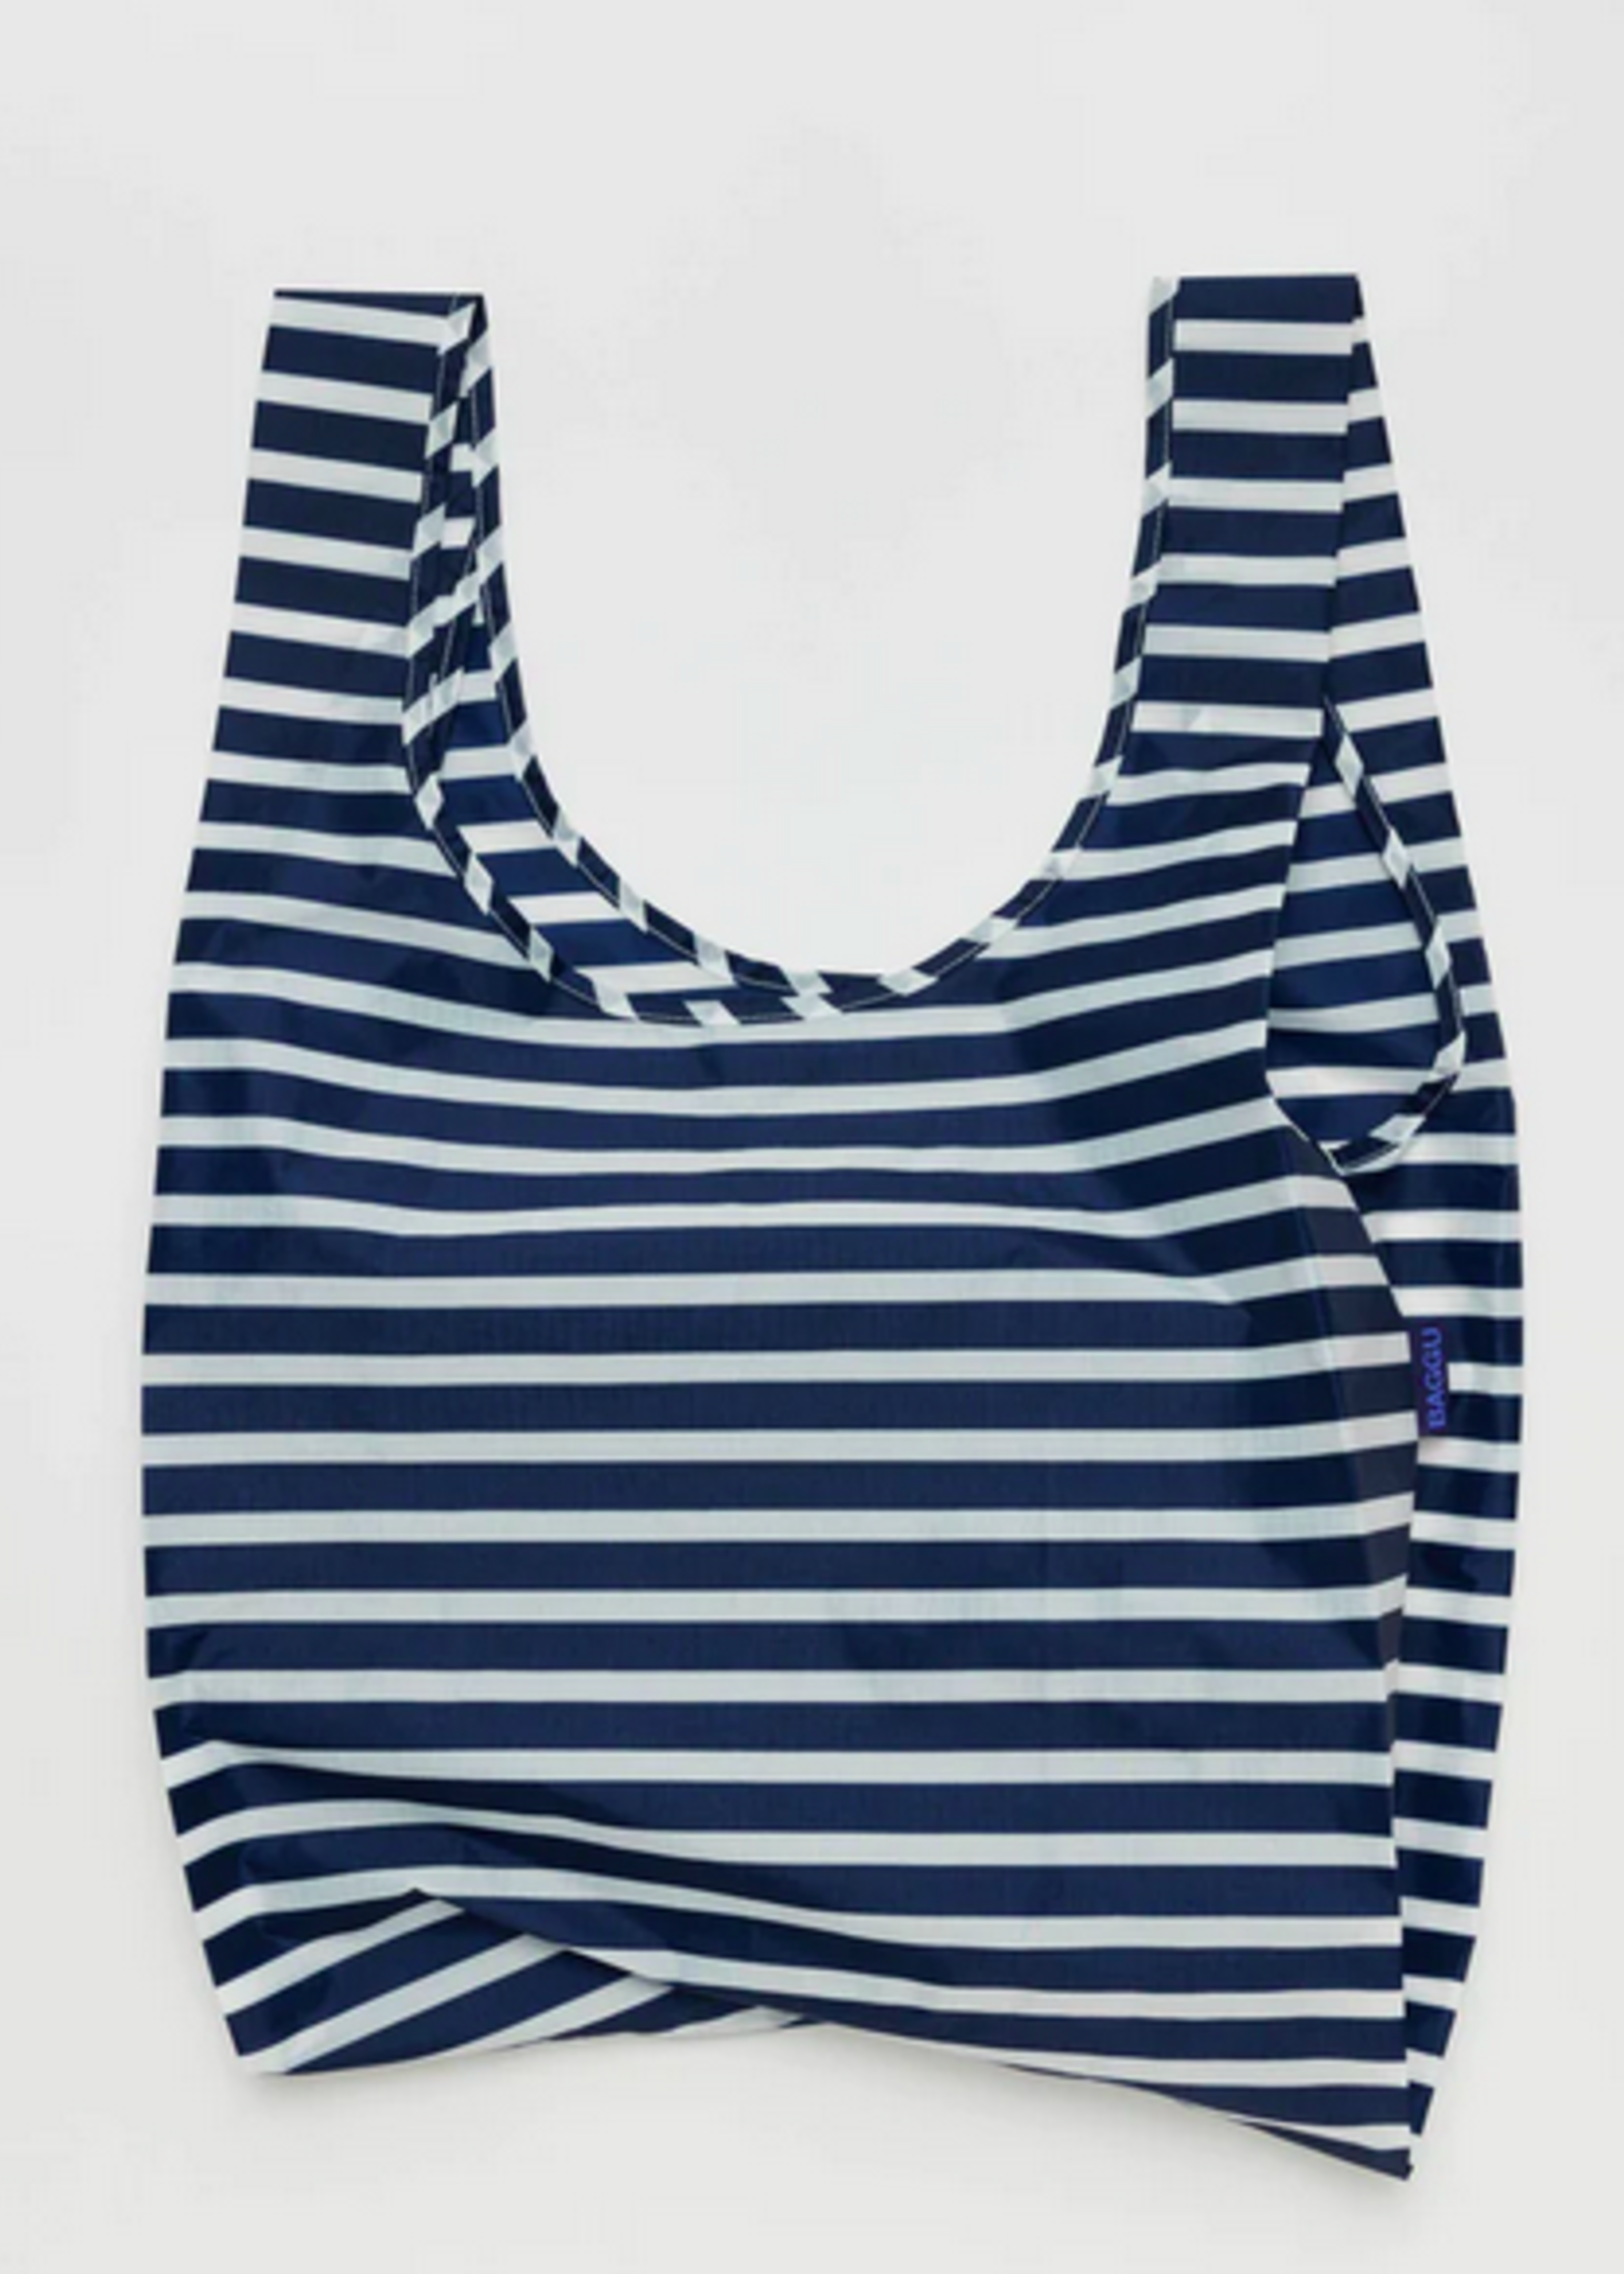 Baggu Standard Reusable bag - Navy Stripe